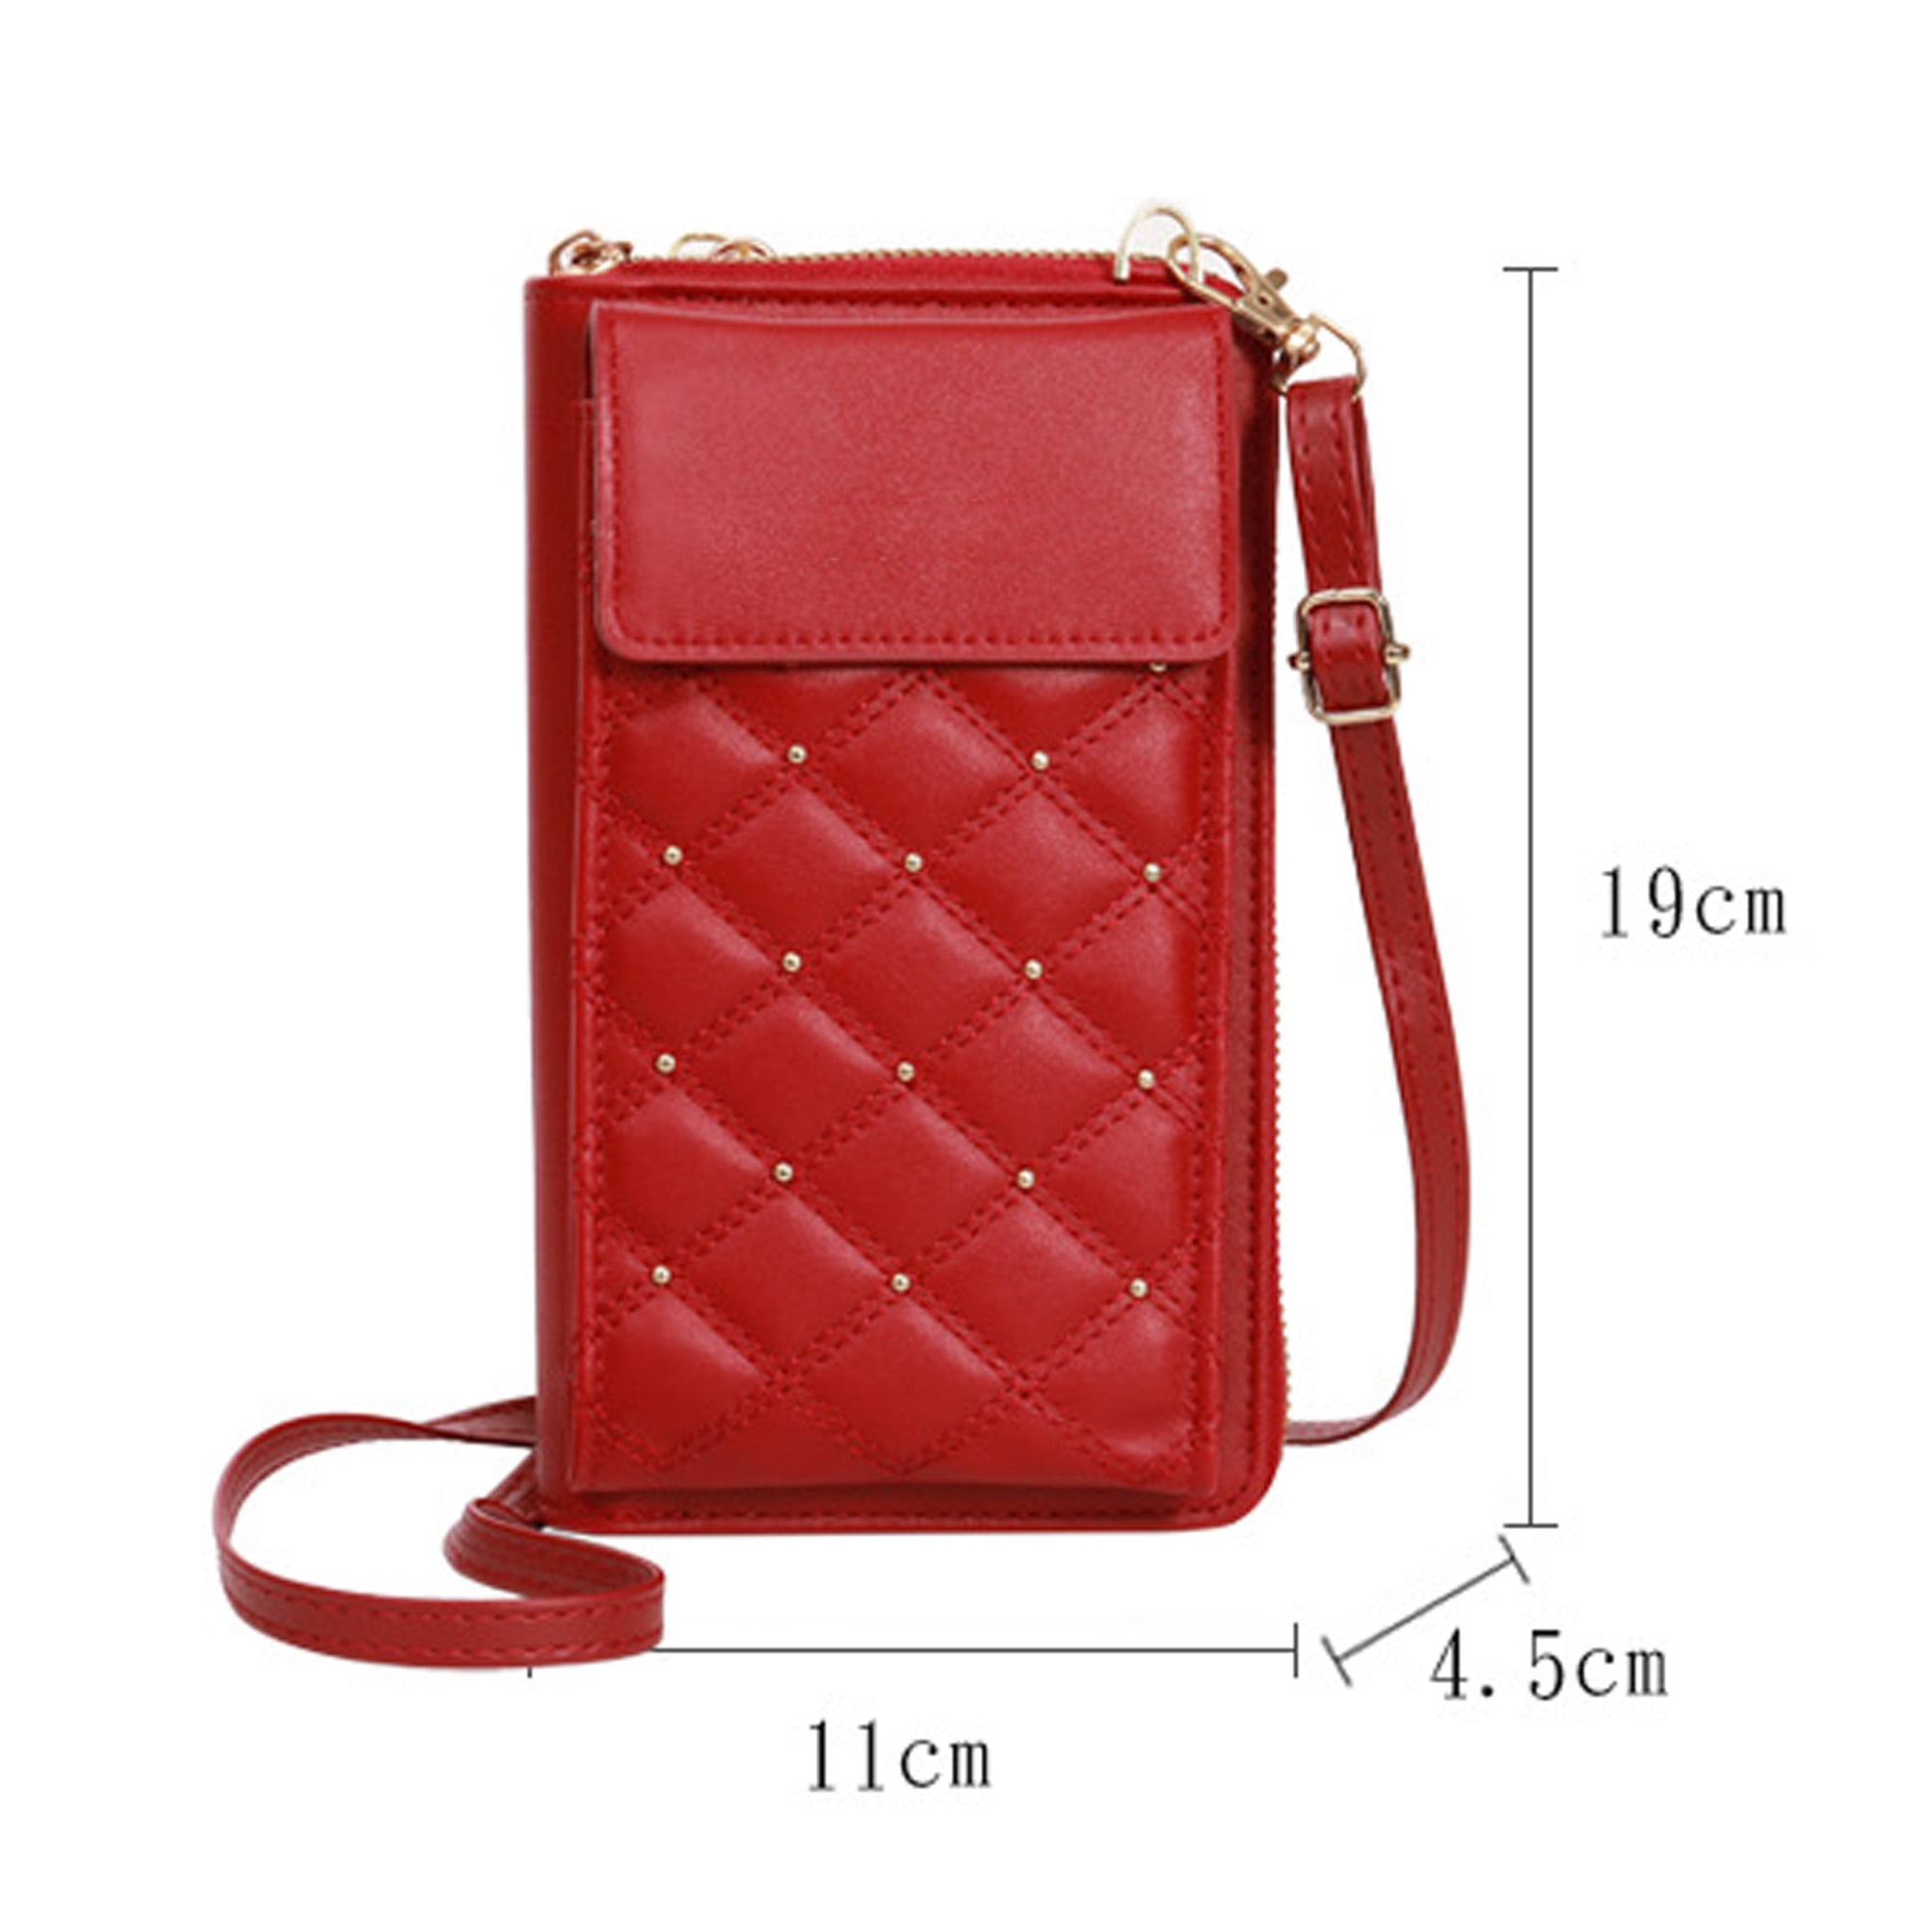 Women's PU Crossbody Bags Phone Wallet Shoulder Bag Ladies Purse Handbag,Pink  